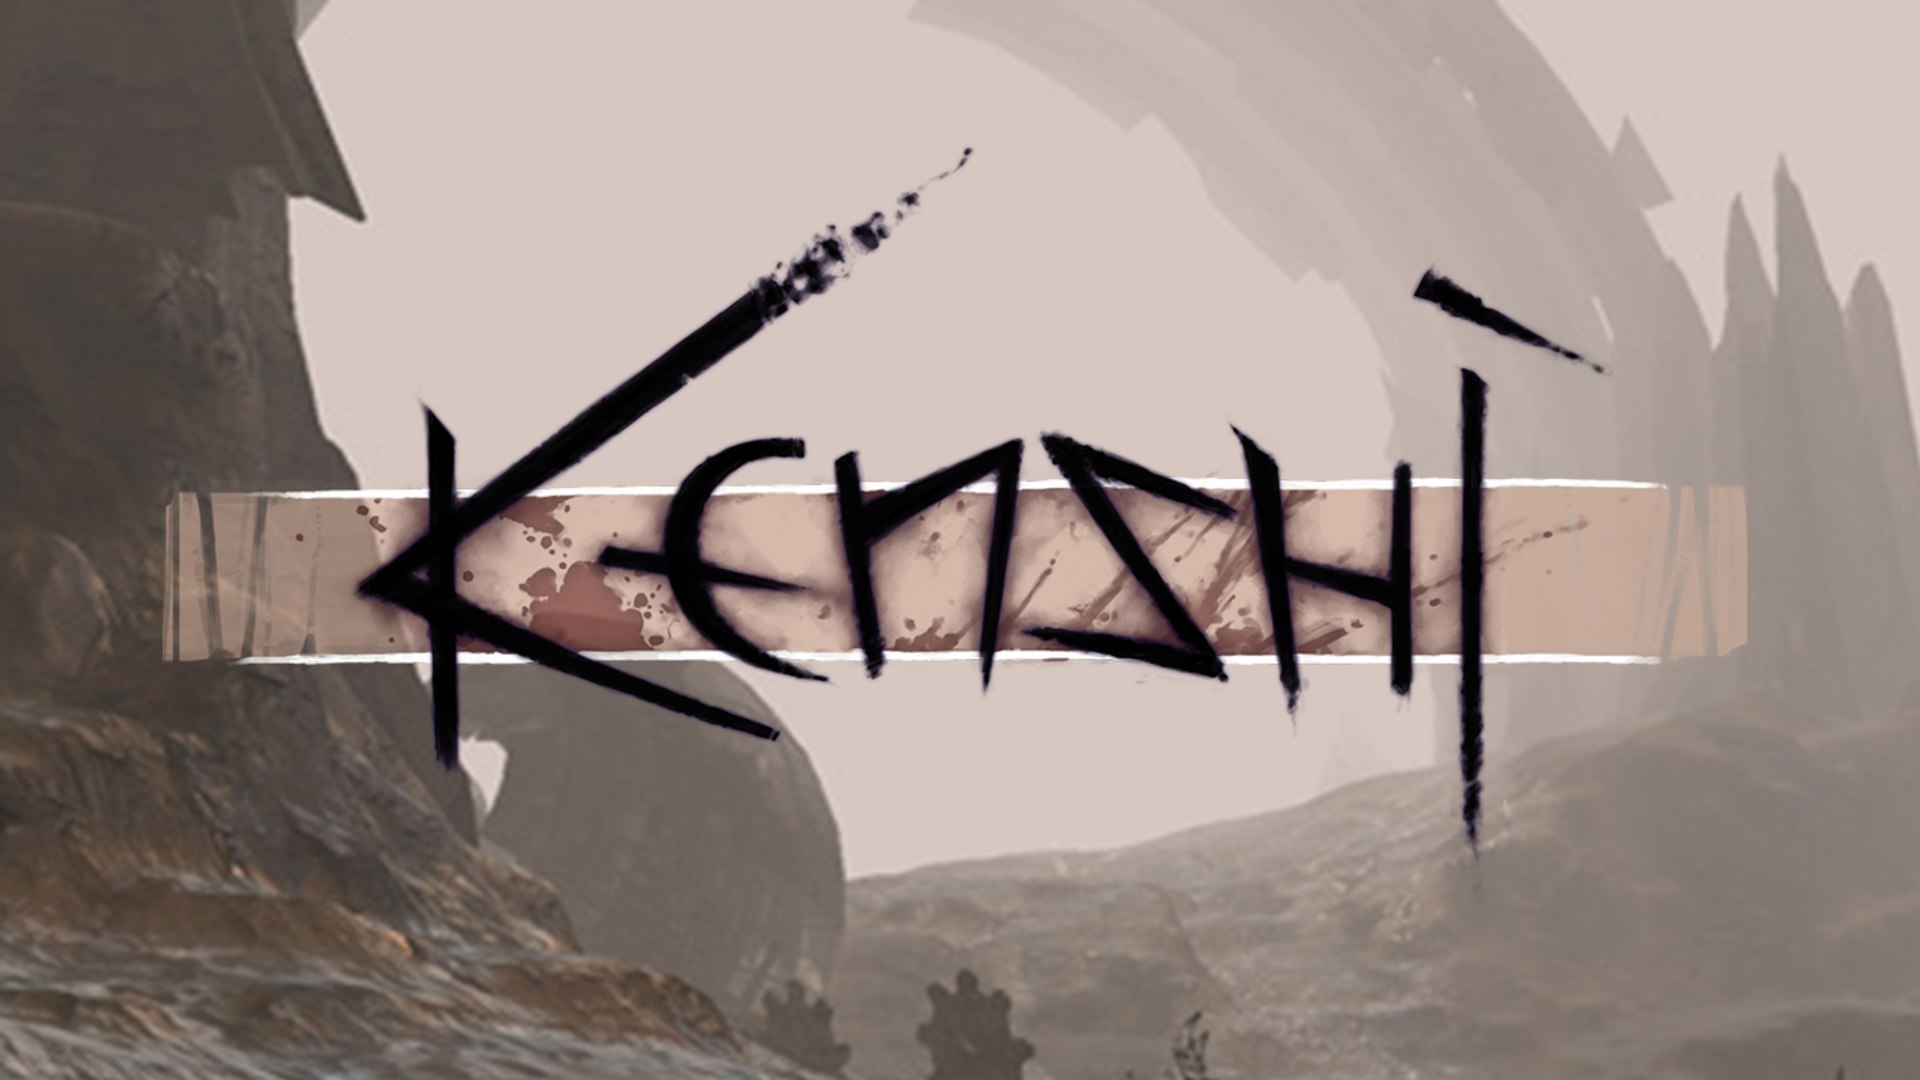 Kenshi PC Game Trailer